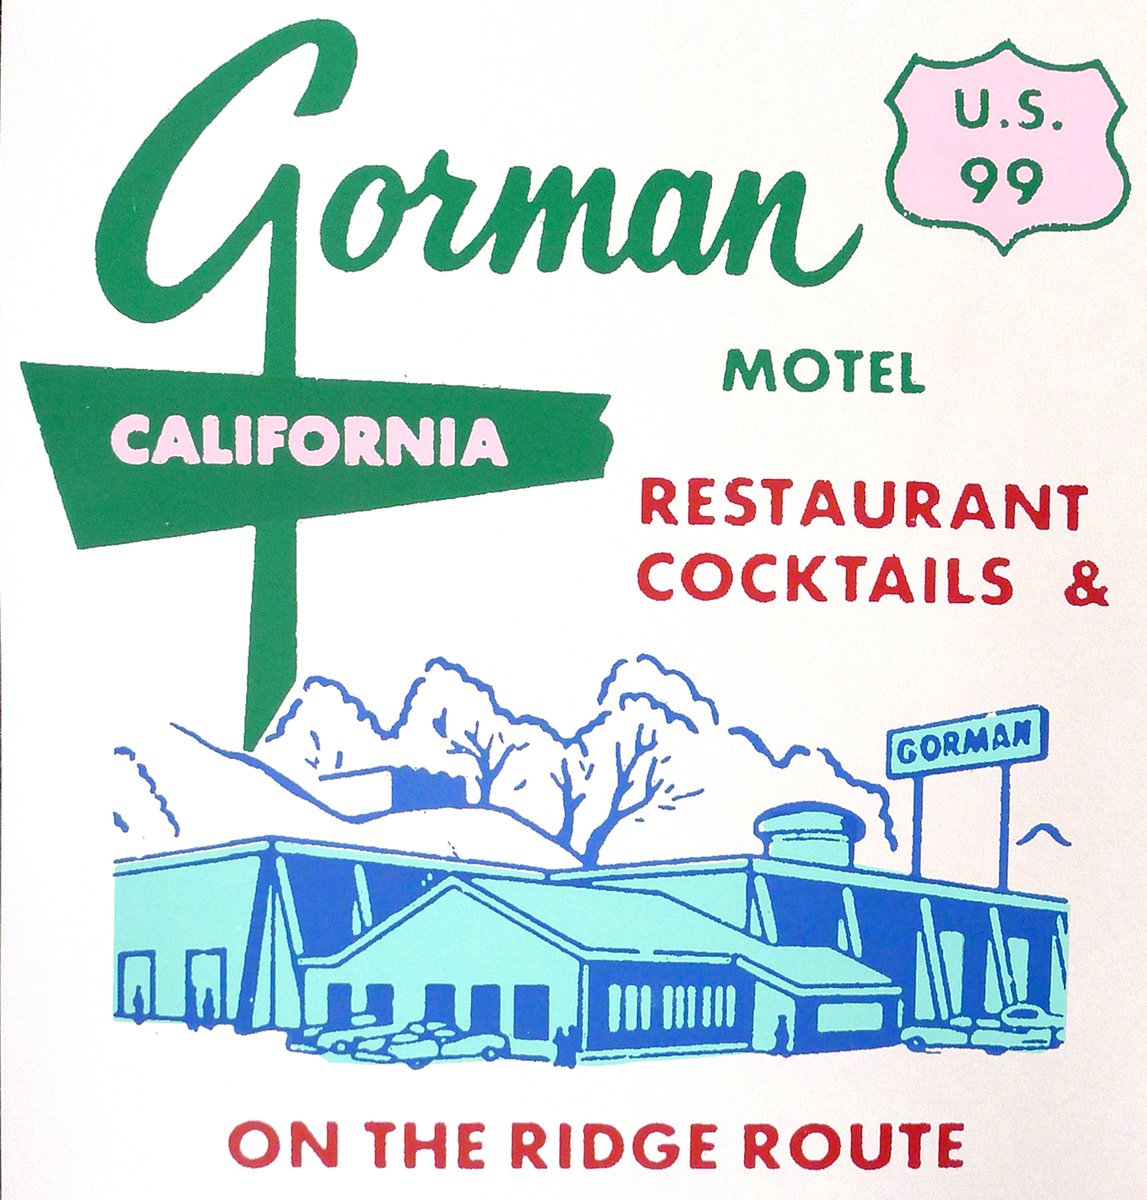 motel california - gorman26 by Francis Van Maele